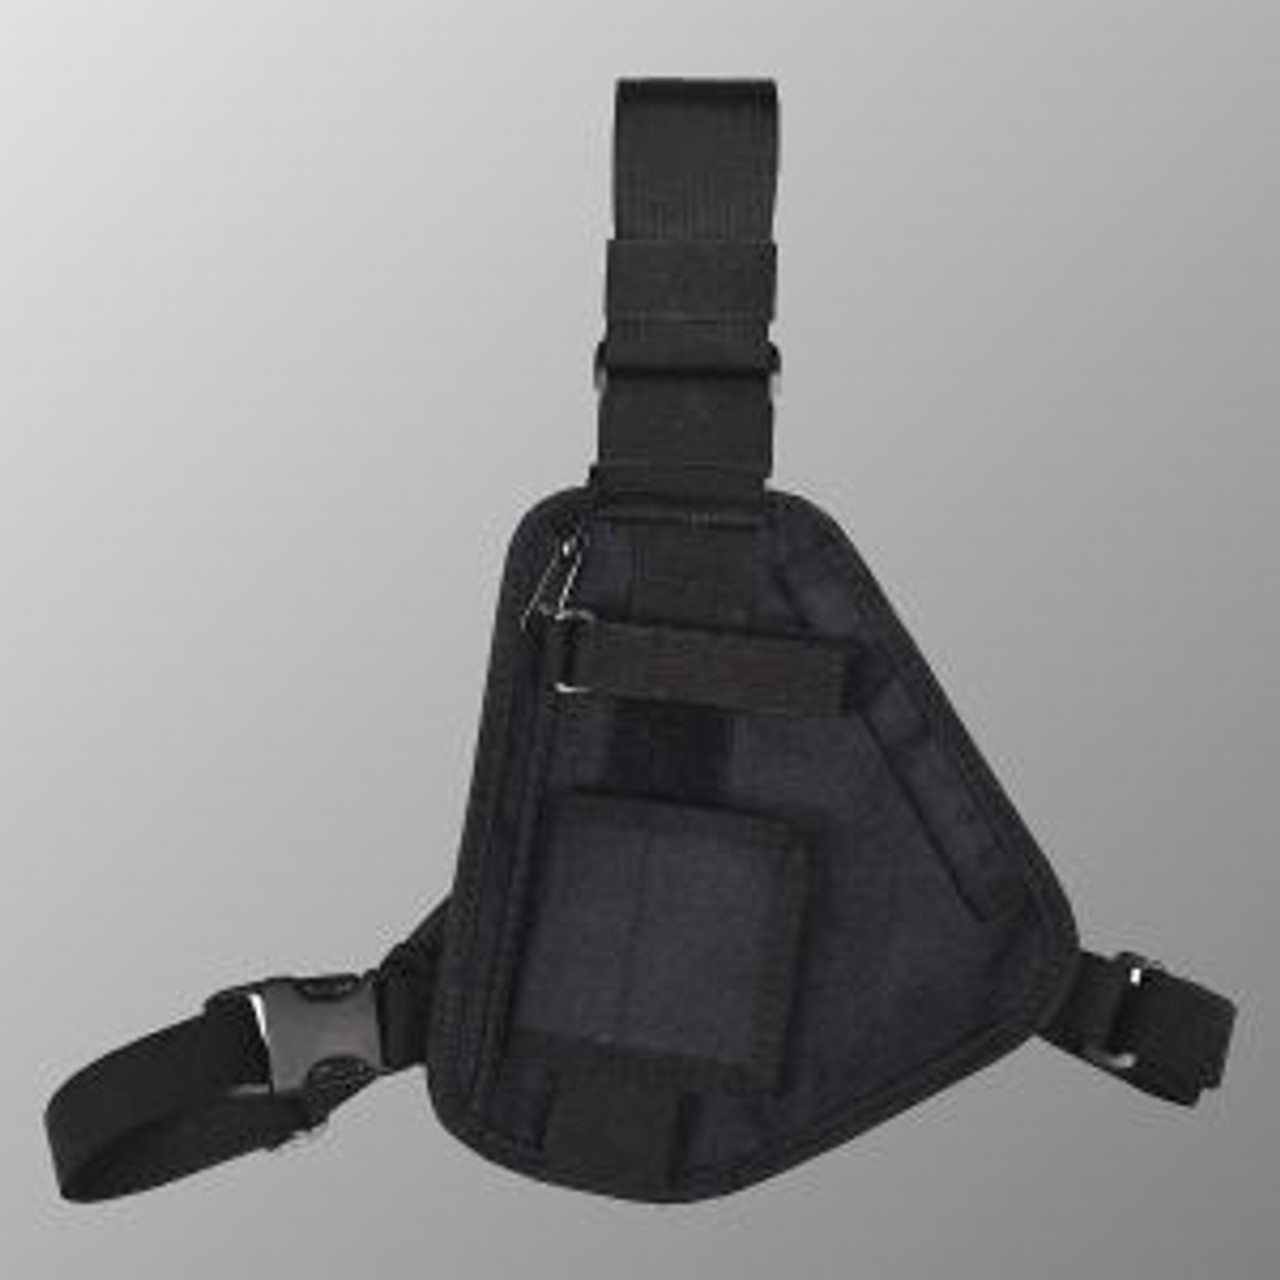 Motorola PR400 3-Point Chest Harness - Black